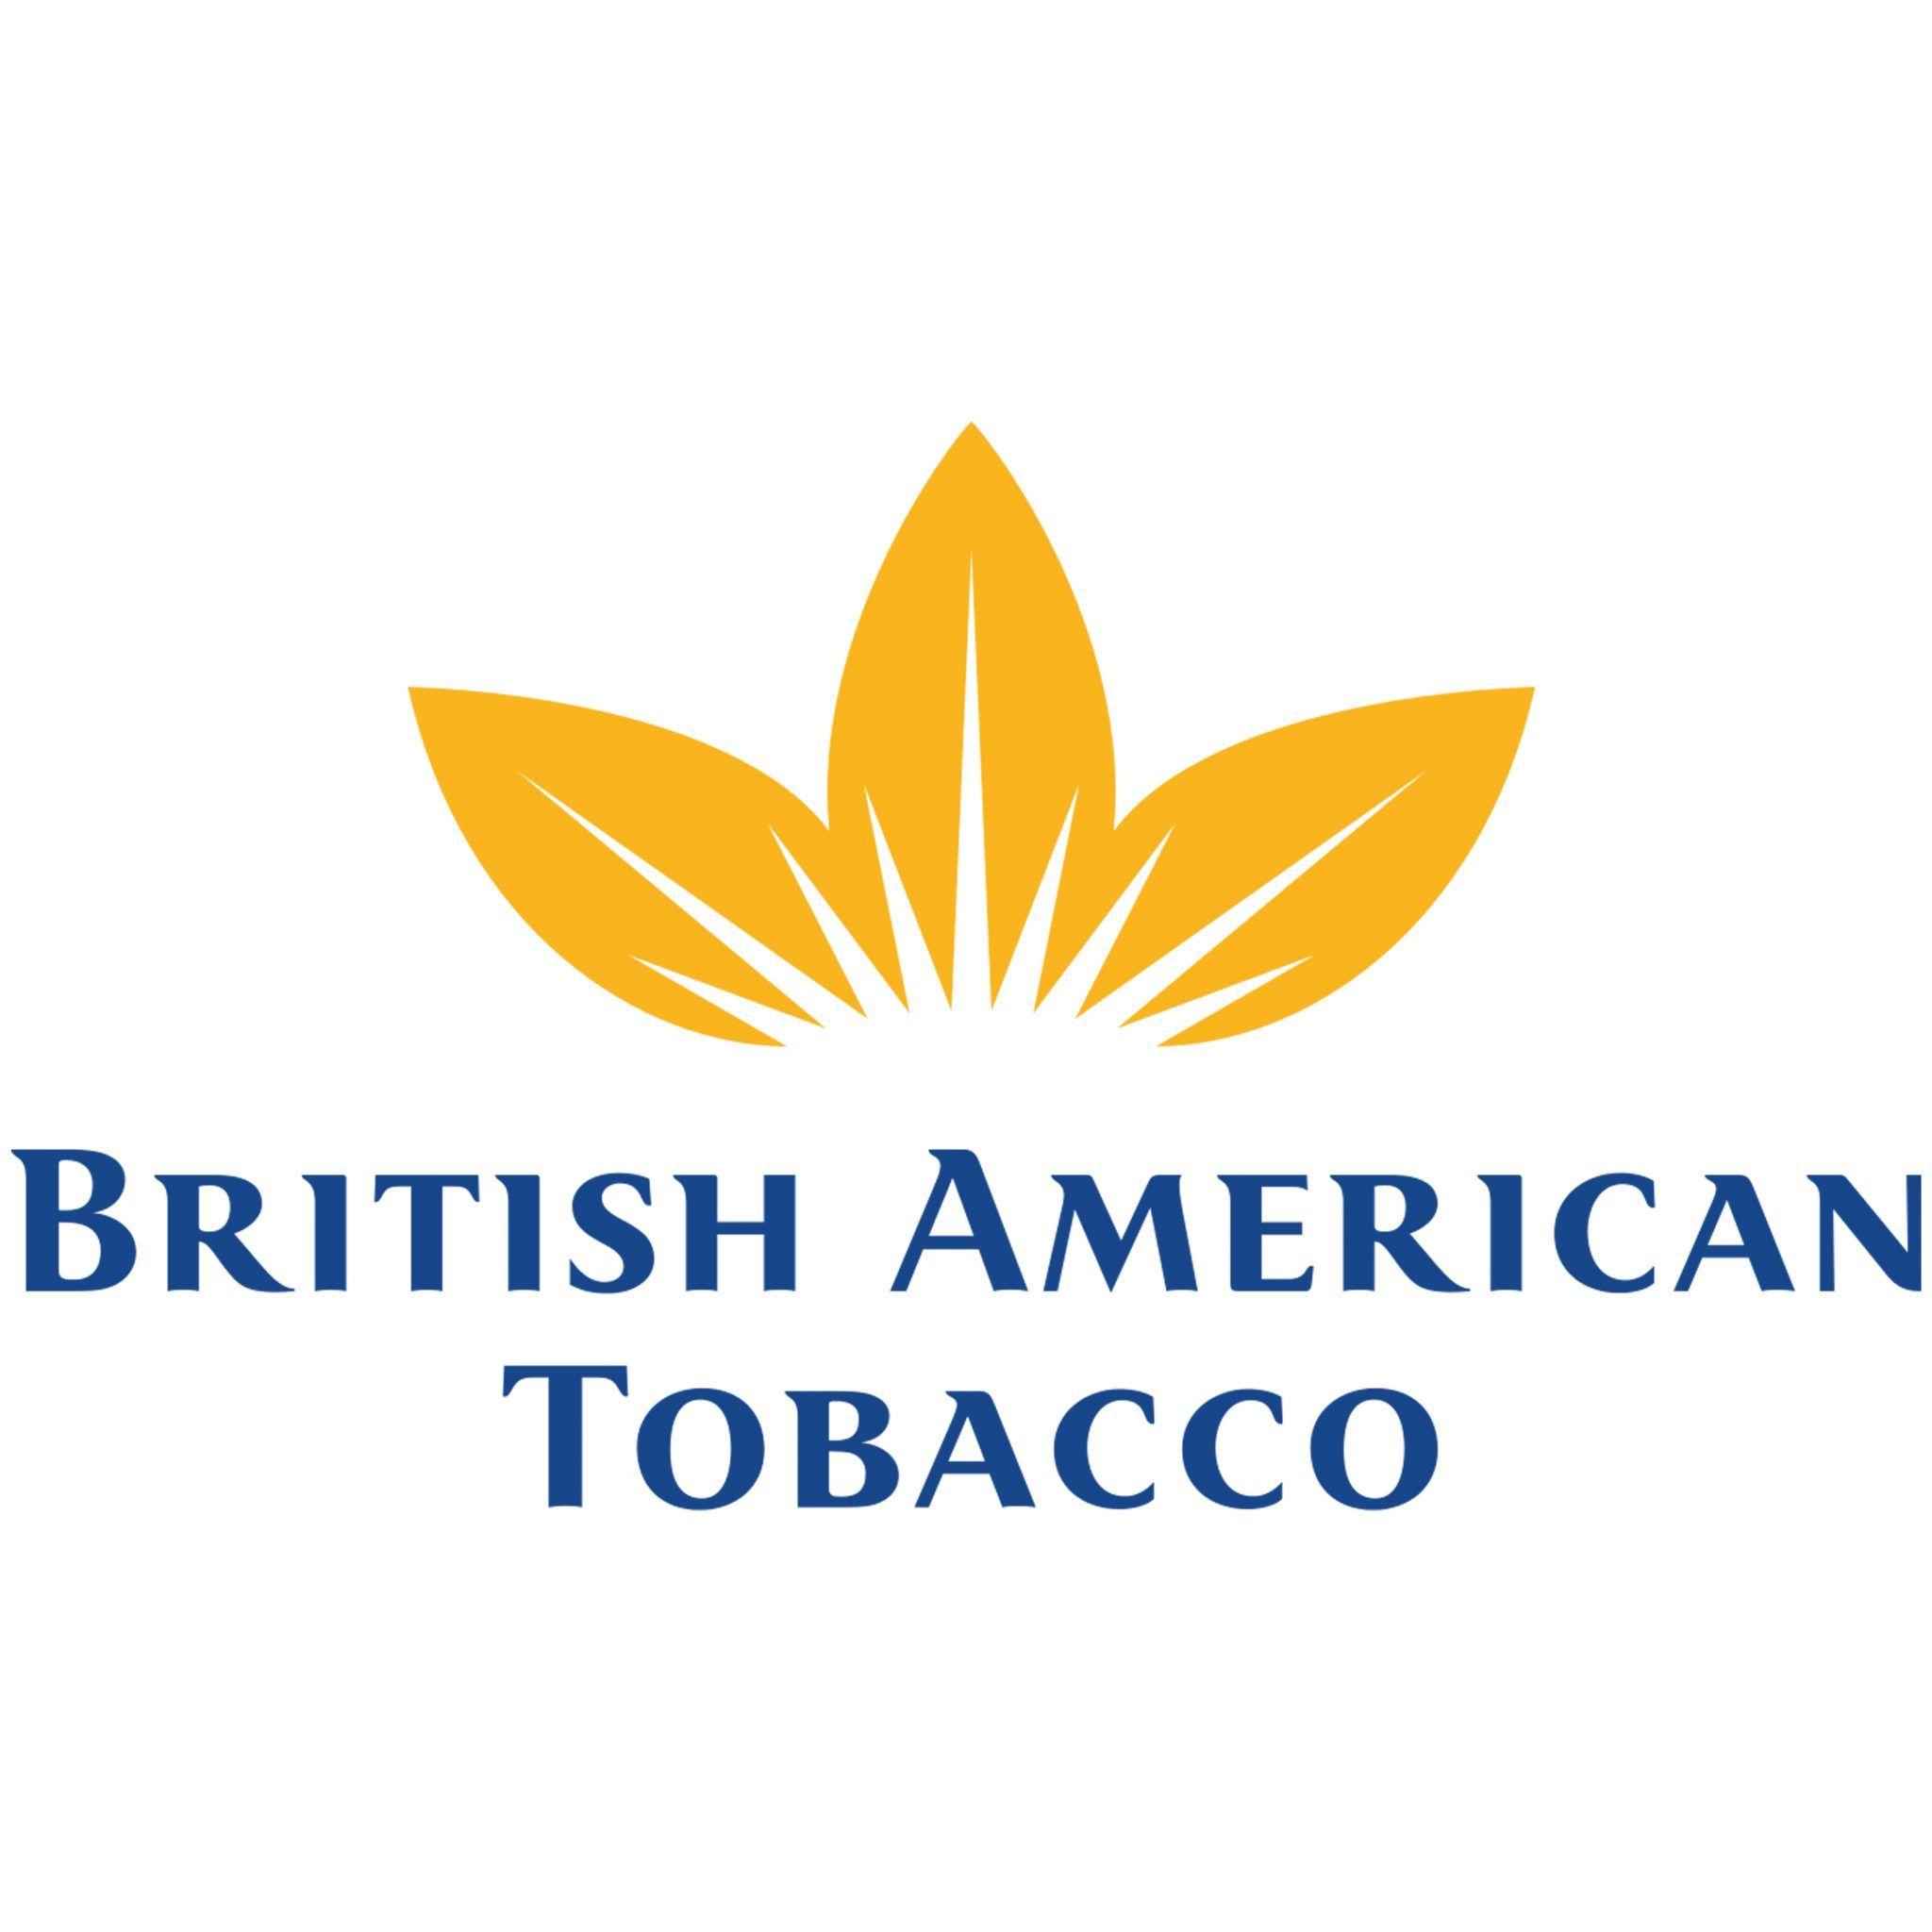 UK British American Tobacco Logo - British American Tobacco Square - SkillSet Ltd